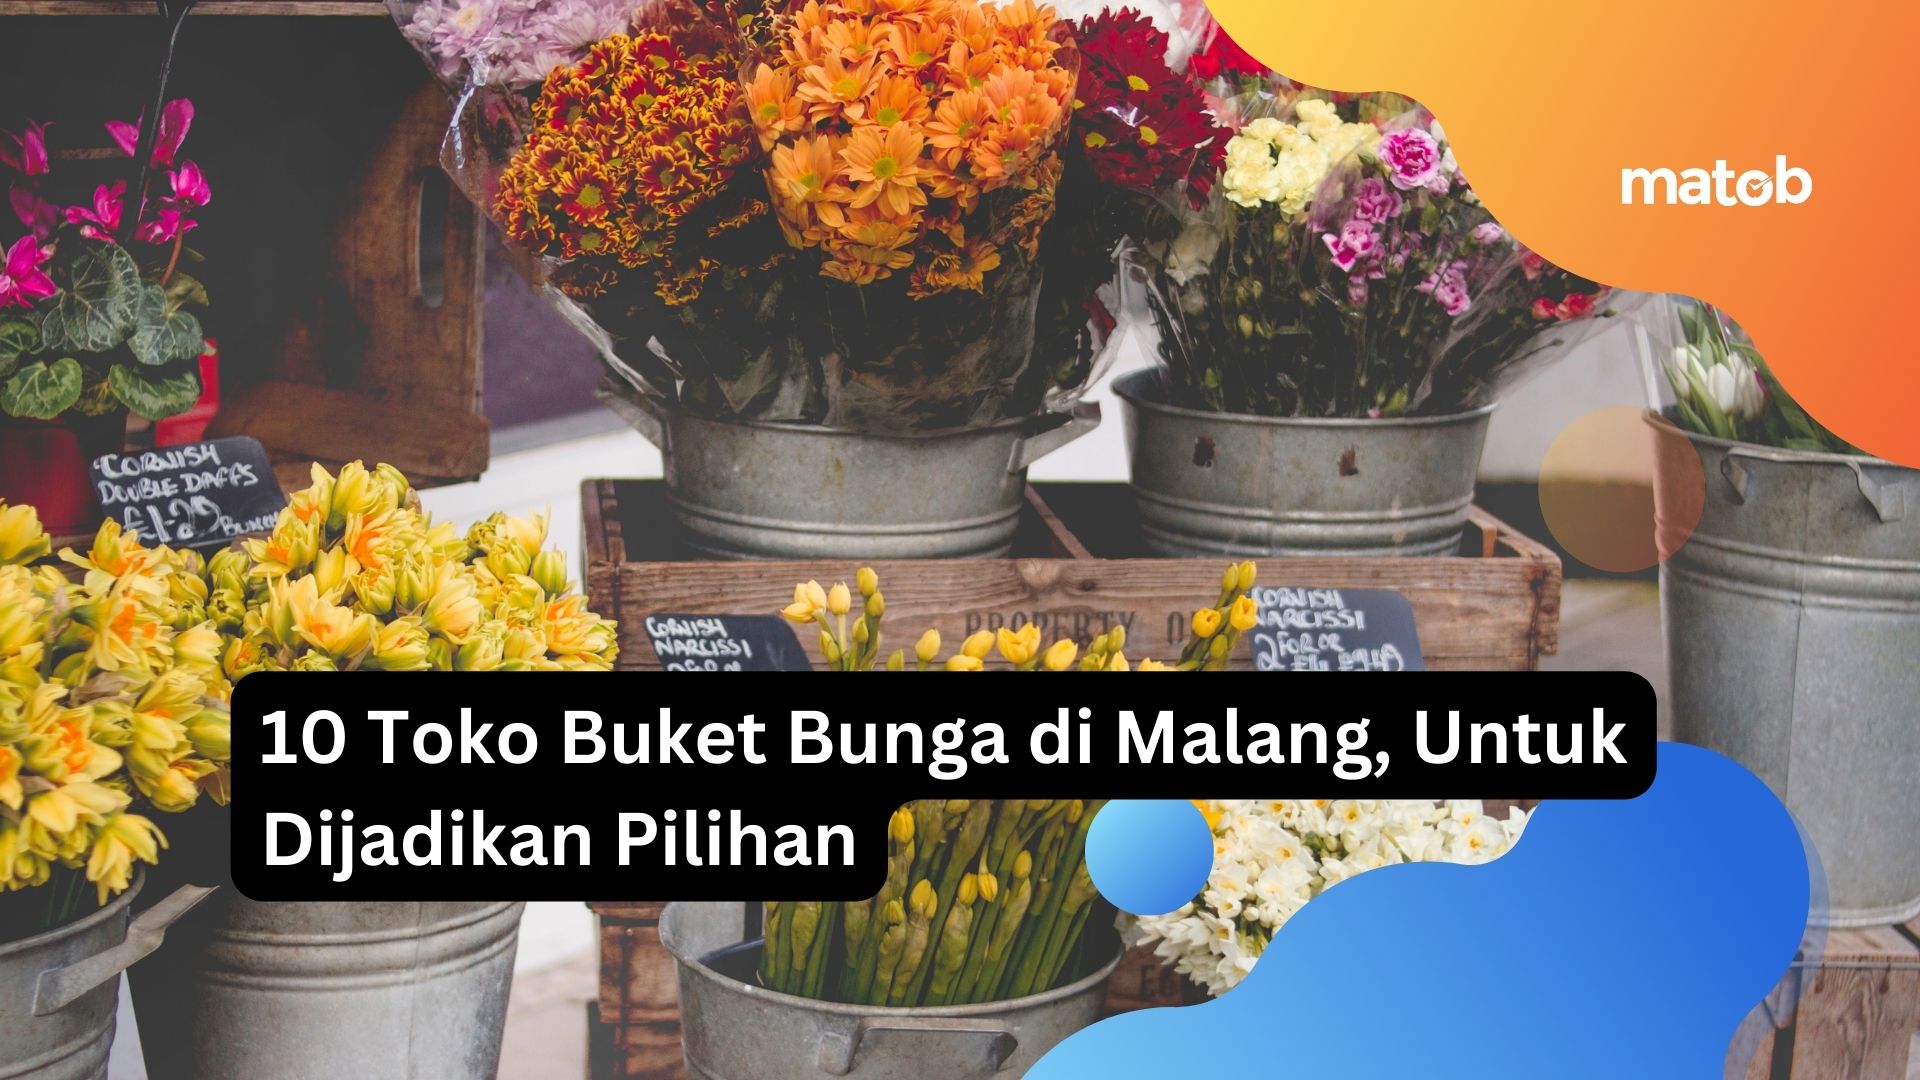 10 Toko Buket Bunga di Malang, Untuk Dijadikan Pilihan